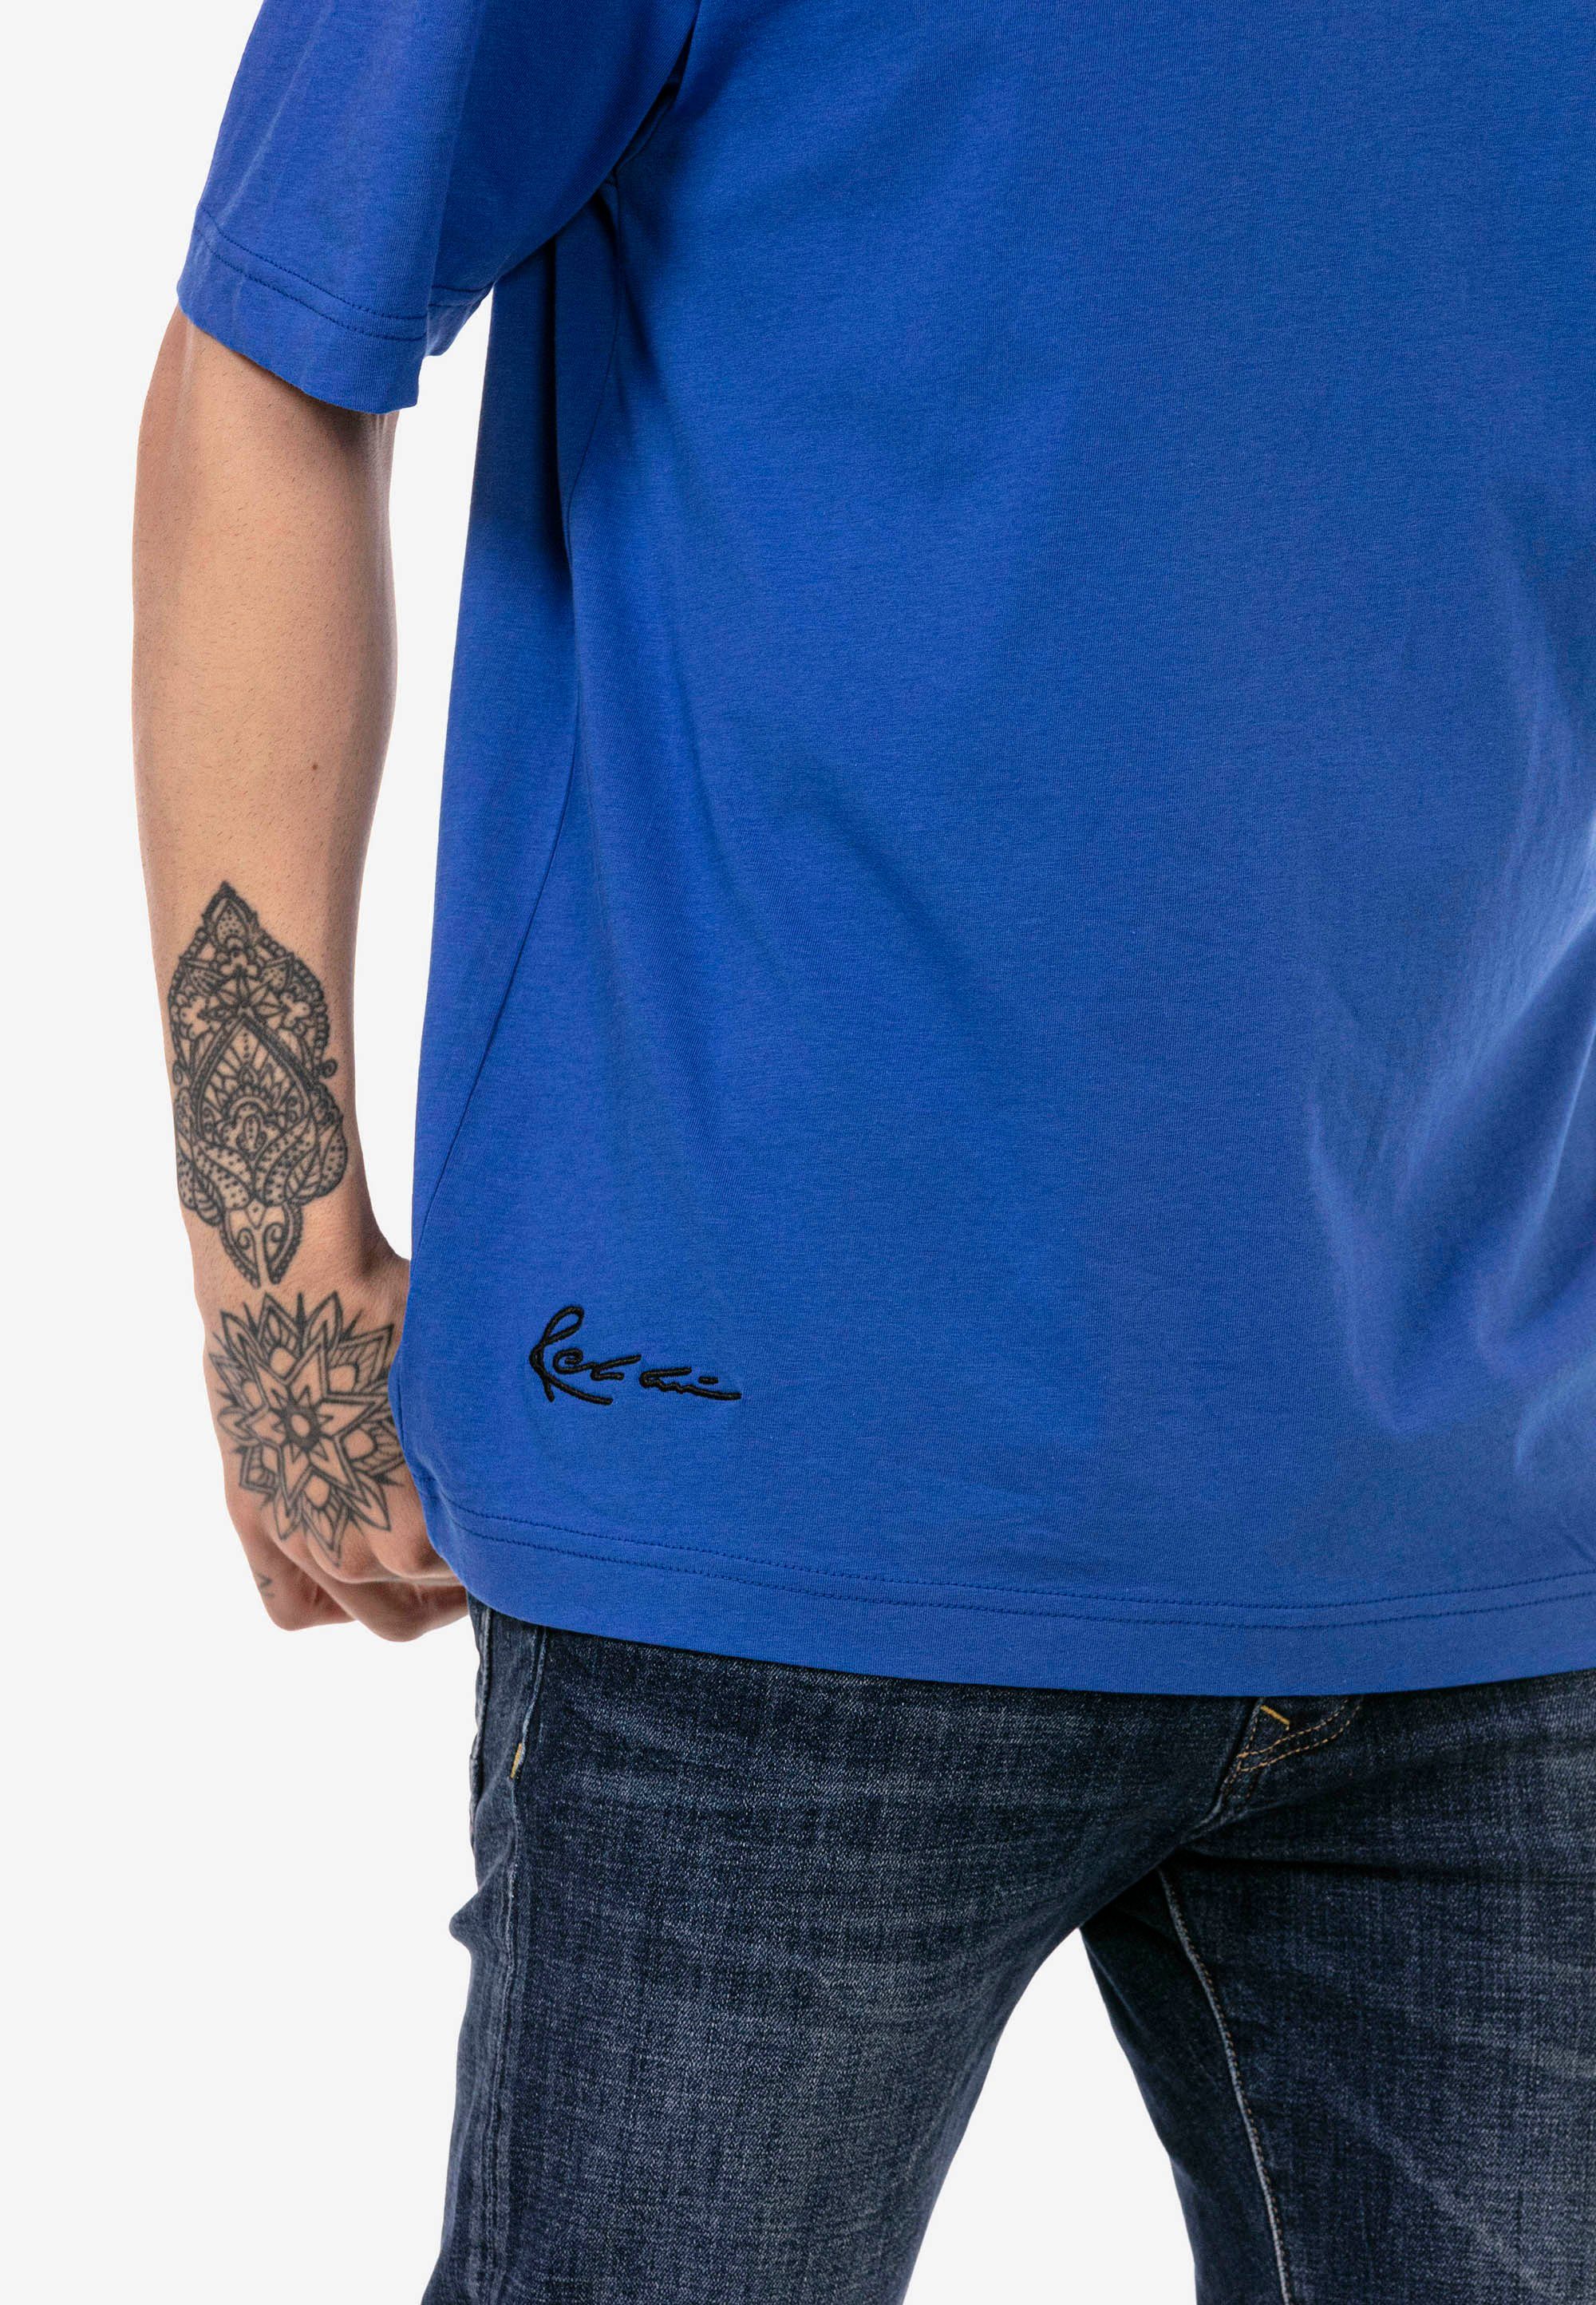 RedBridge T-Shirt im Oversize-Schnitt angesagten blau